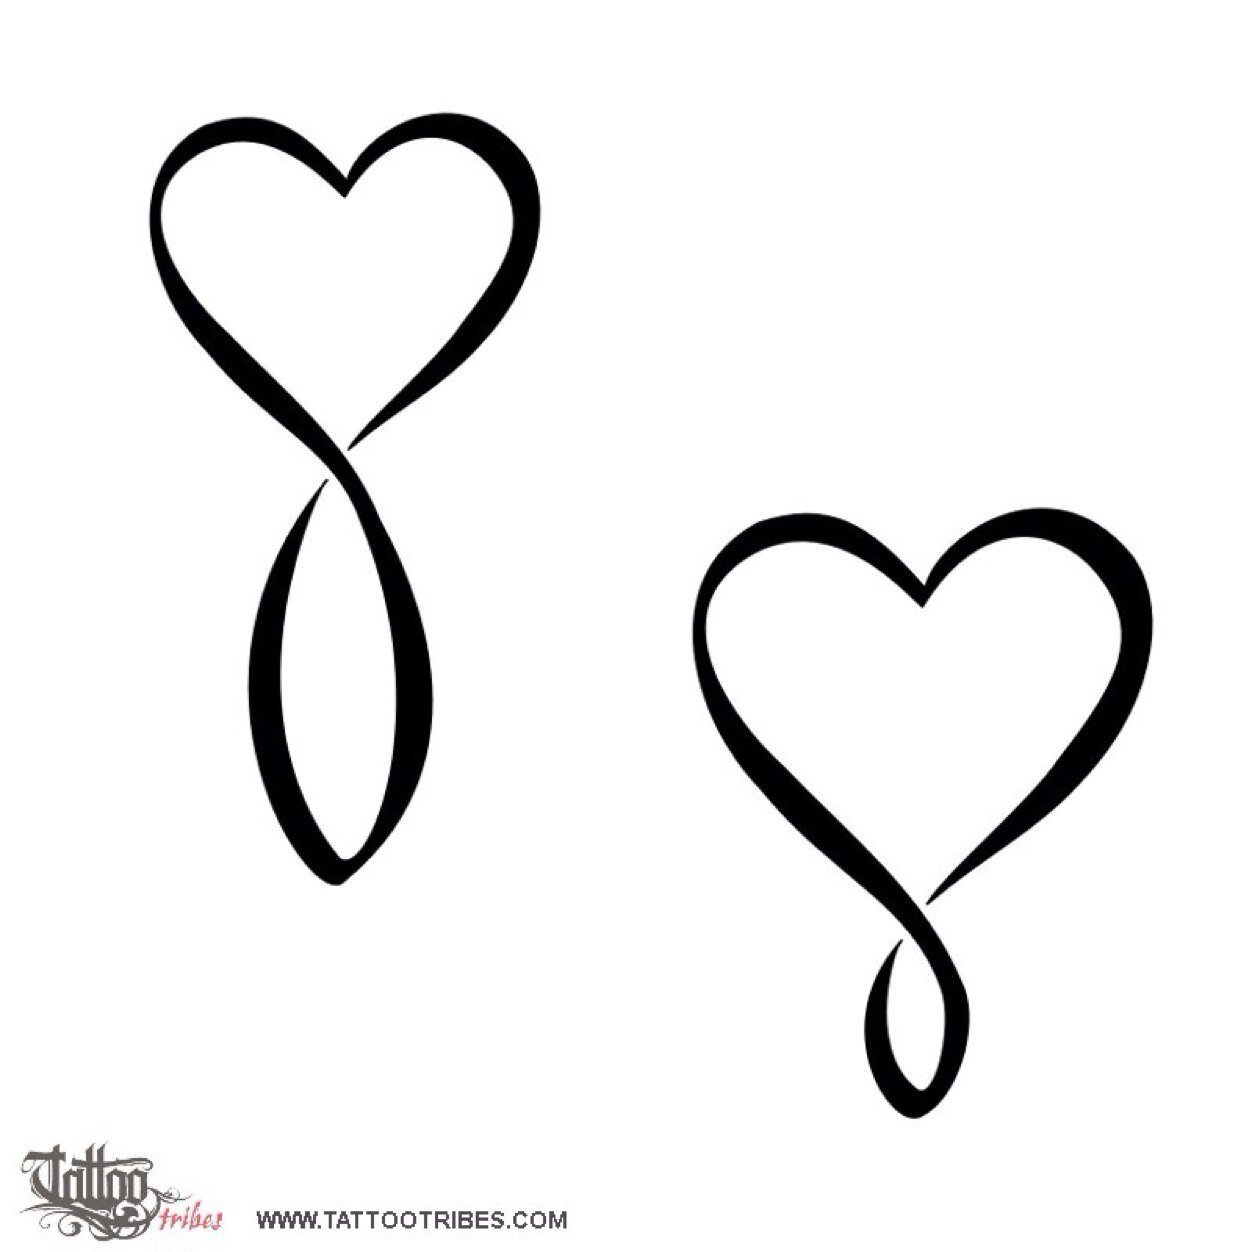 Two Hearts Infinity Symbols Tattoo Design